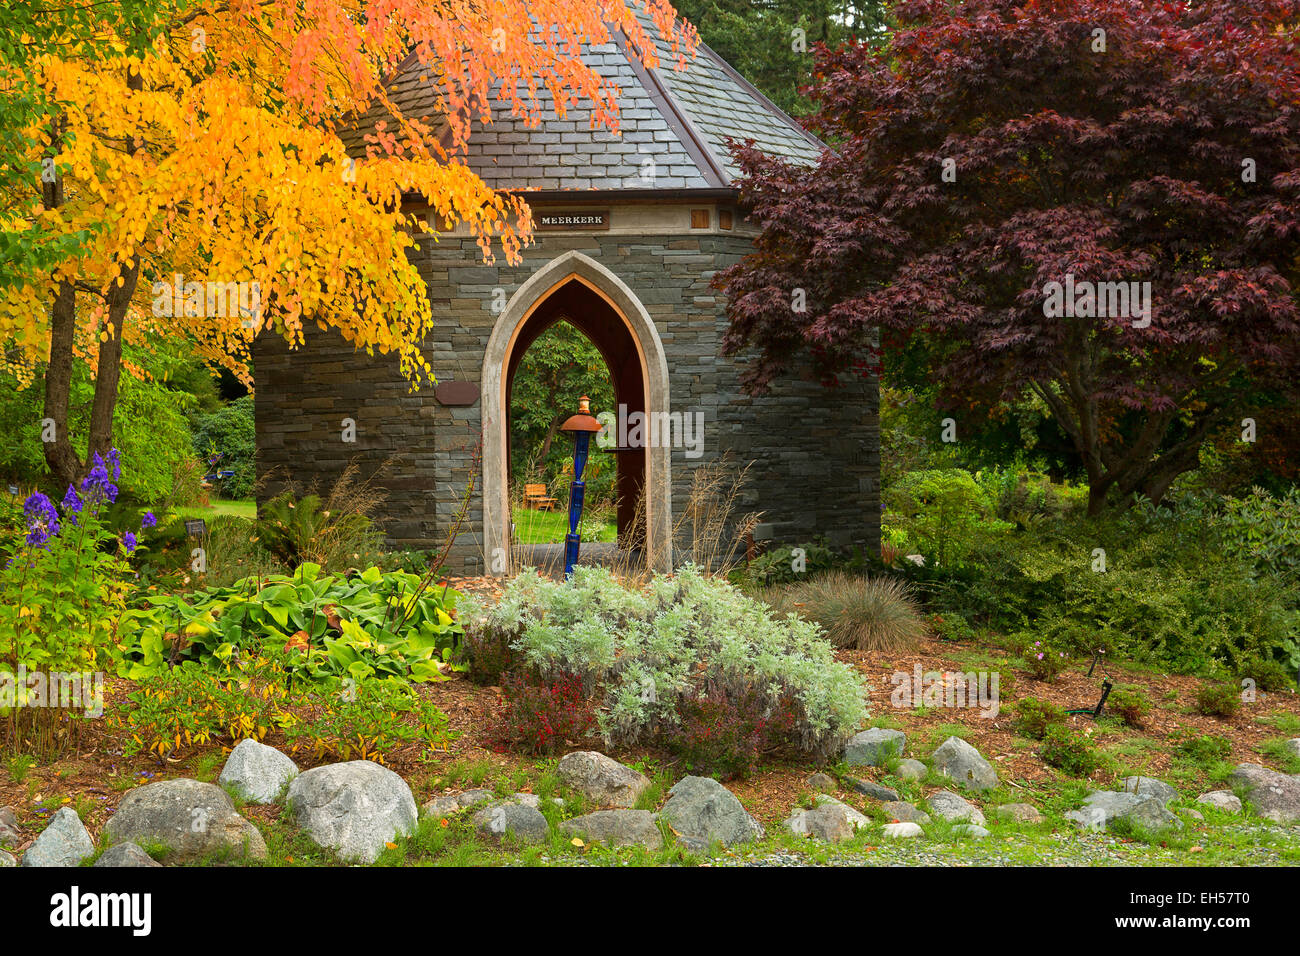 Meerkerk Gardens, Washington, fall, Whidbey Island, Entry gate and kiosk Stock Photo